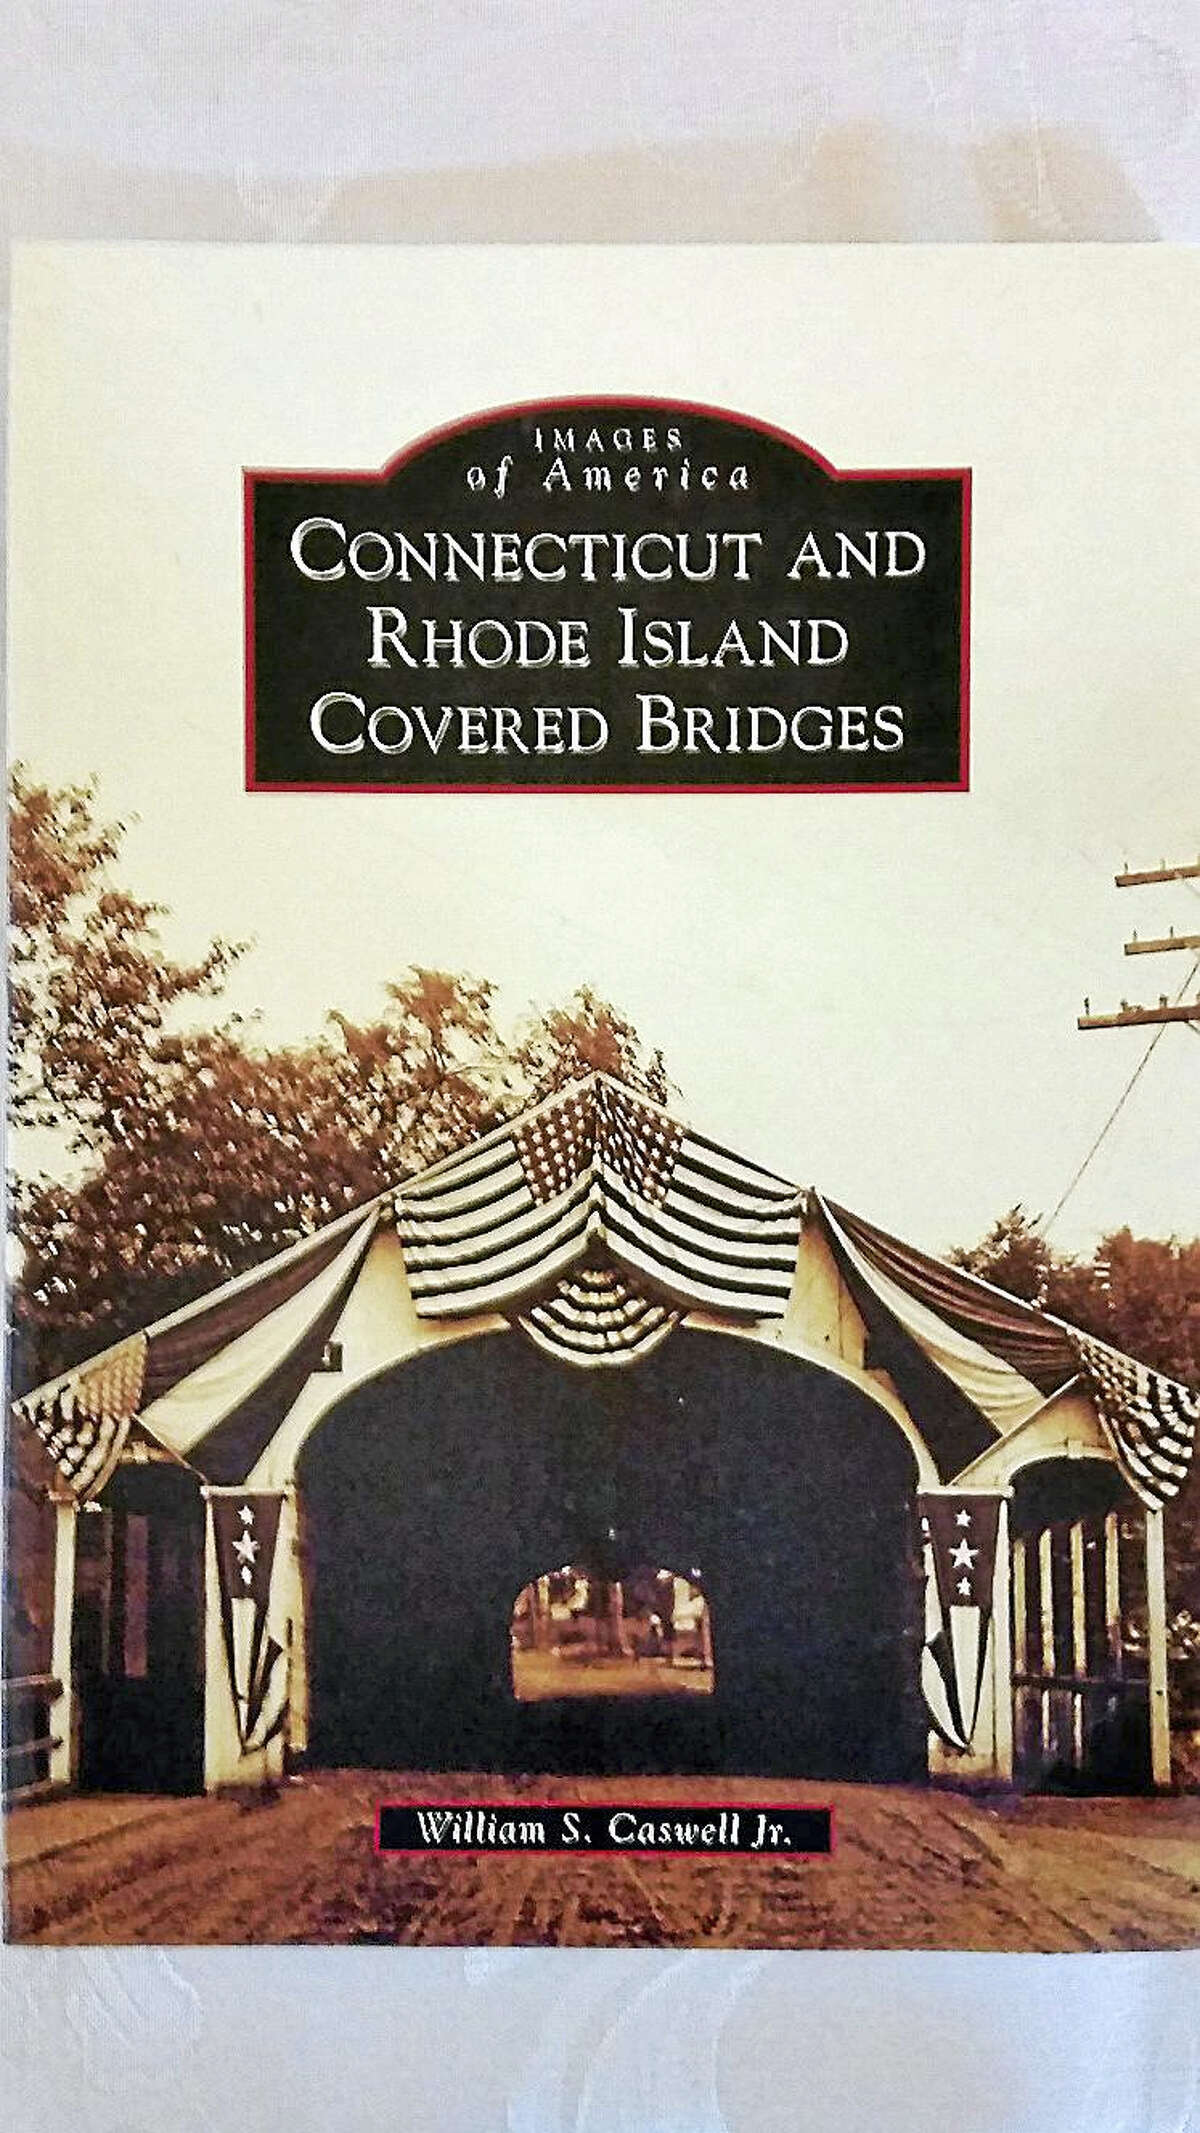 N.F. Ambery Caswell's book on covered bridges.